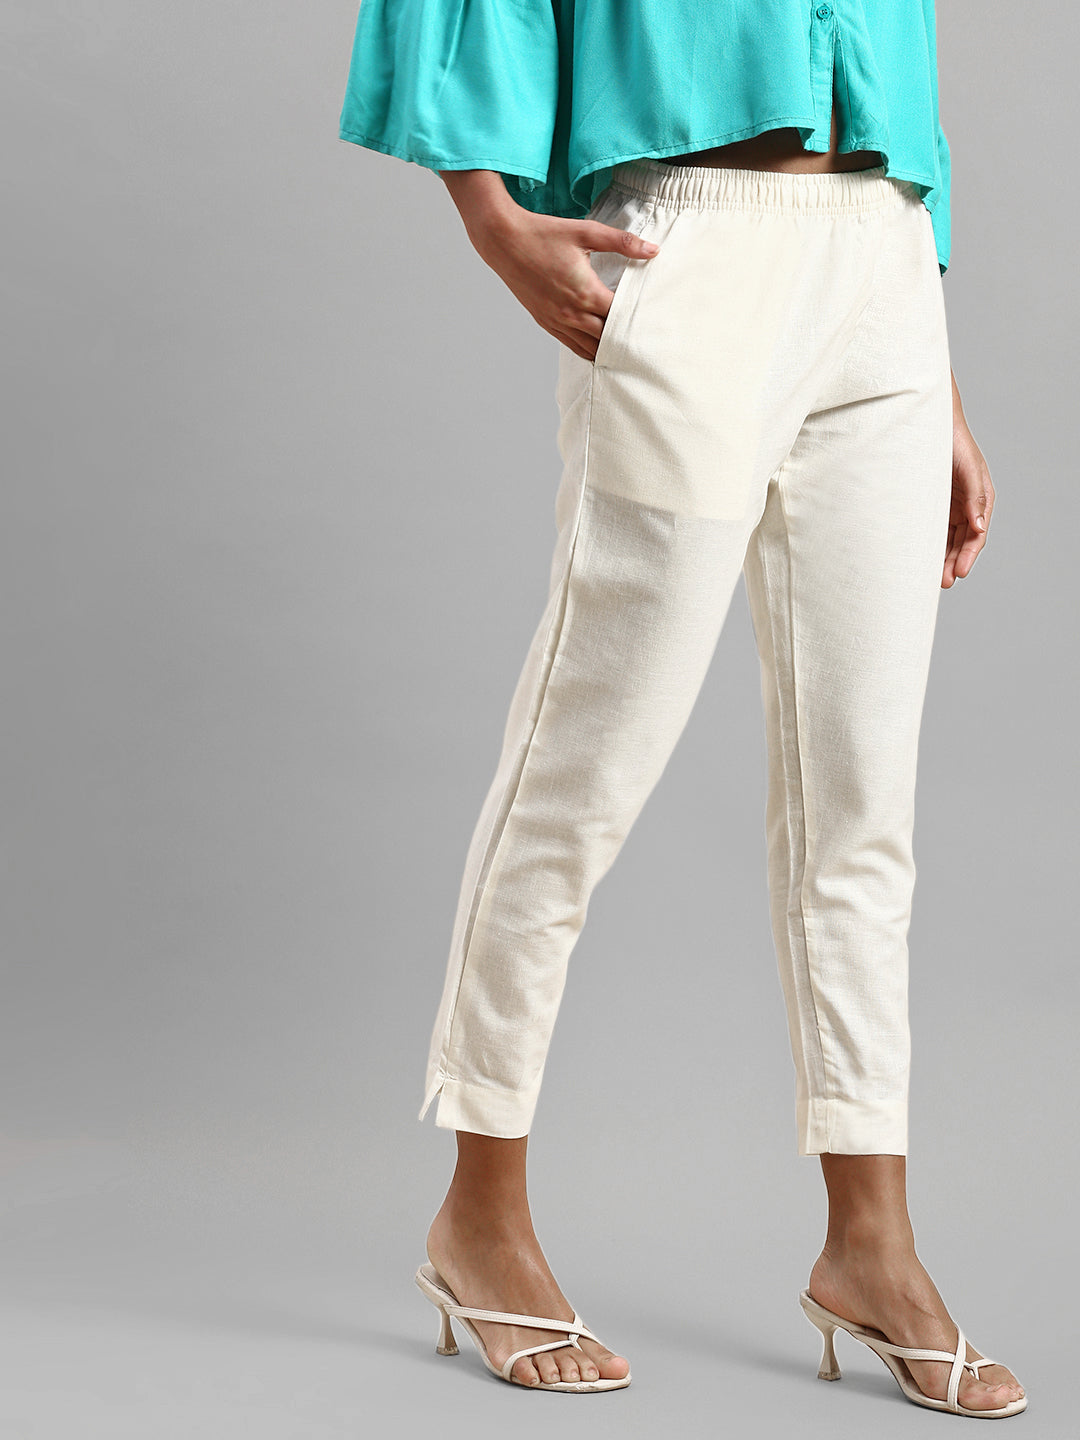 Shop Prisma's Cream Kurti Pant for Women